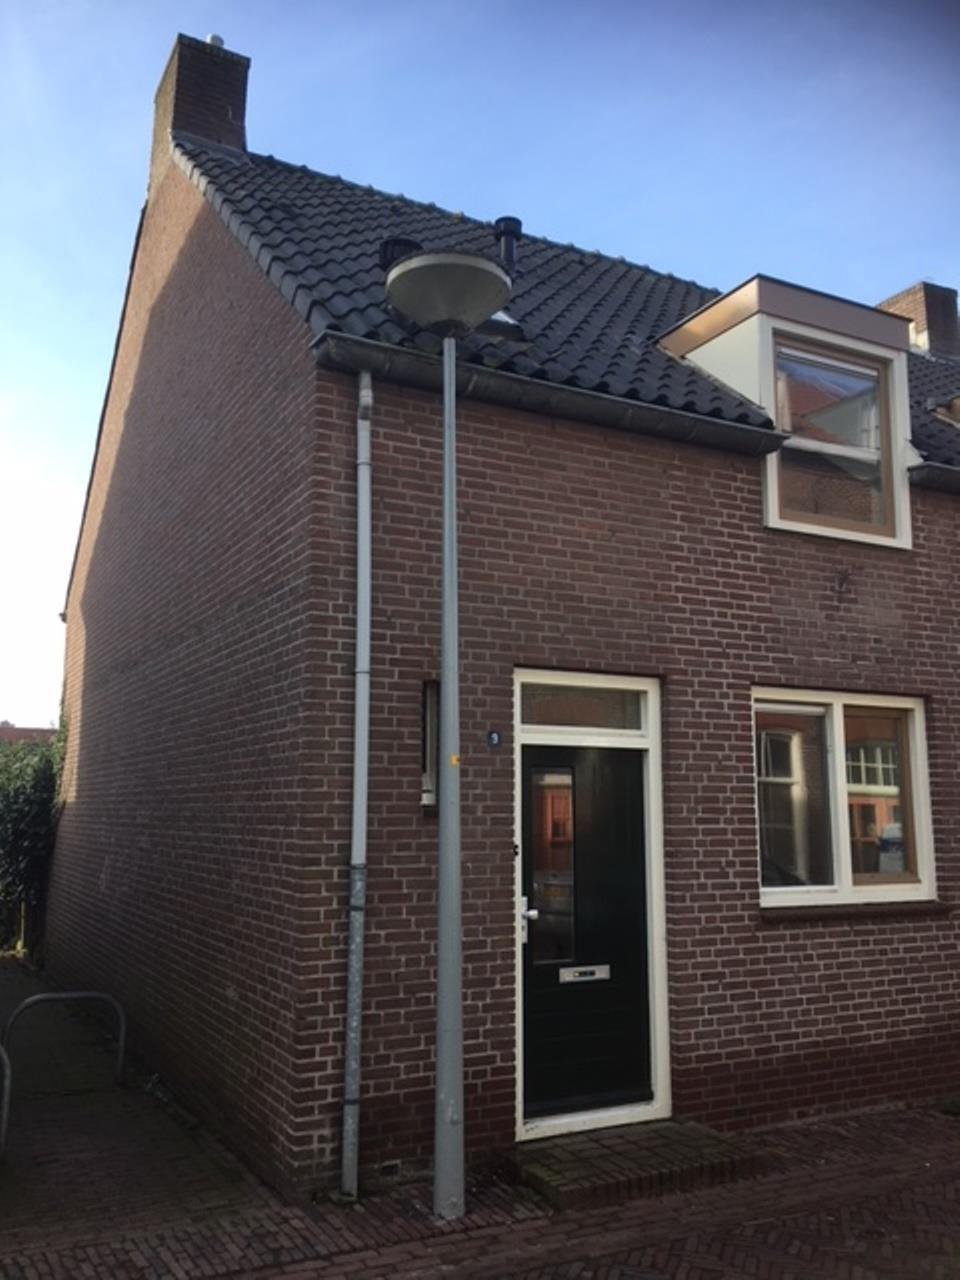 Koetsveldstraat 9, 6981 BE Doesburg, Nederland